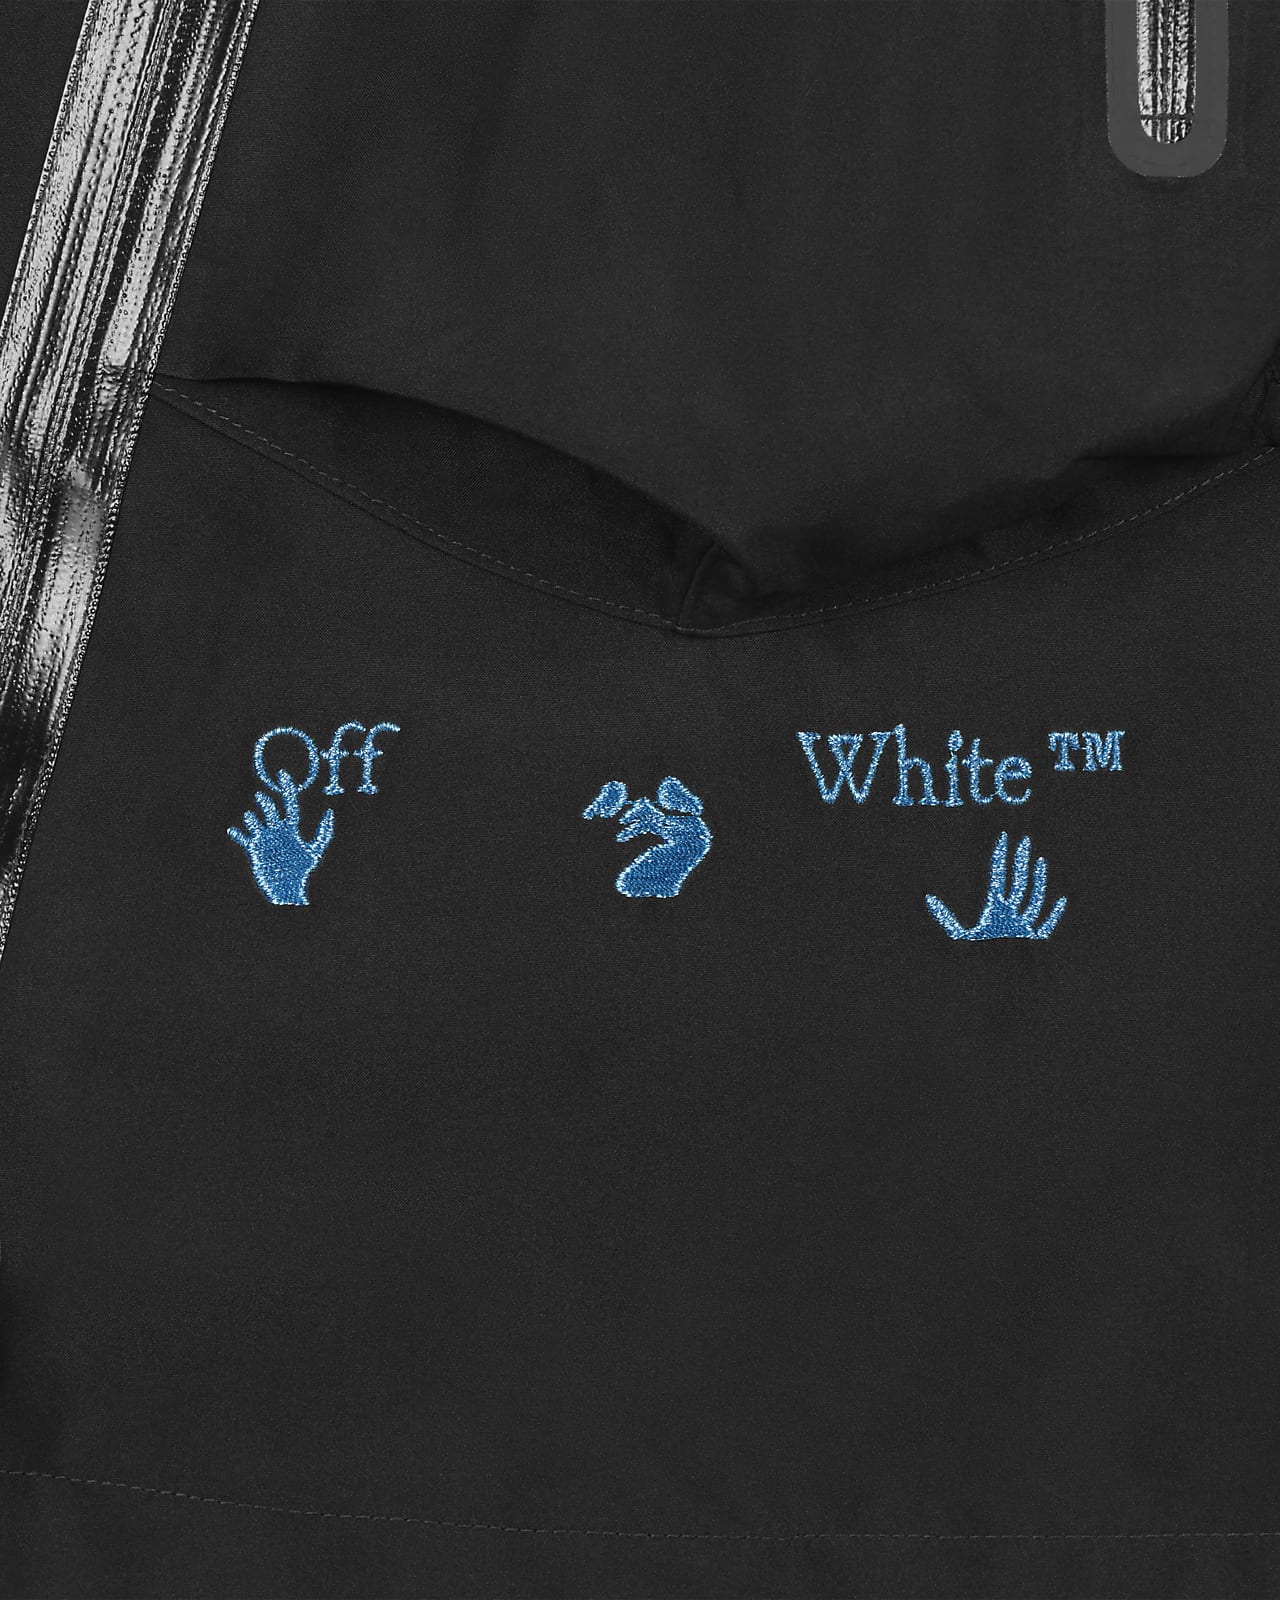 Nike x Off-White™ Men's Jacket. Nike JP